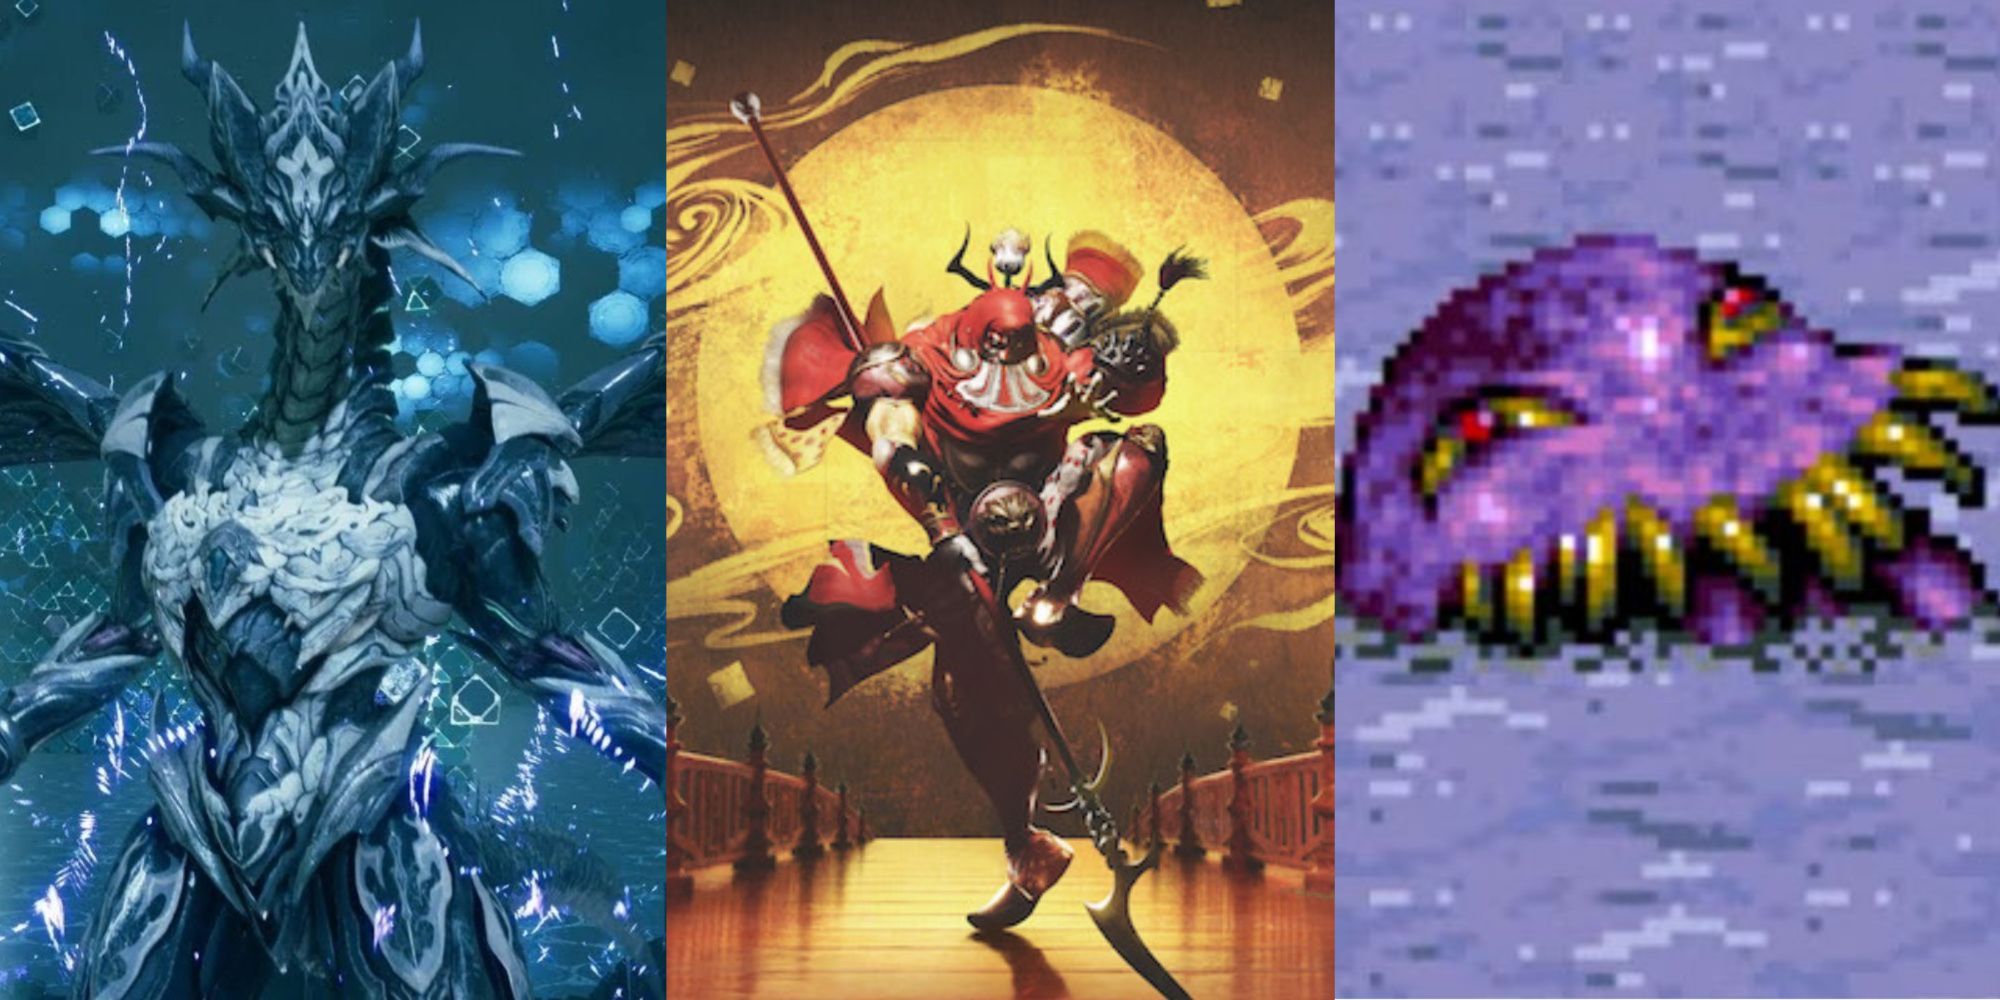 Bahamut in Final Fantasy 7 Remake, Gilgamesh artwork for Stranger of Paradise, and Ultros in water, left to right